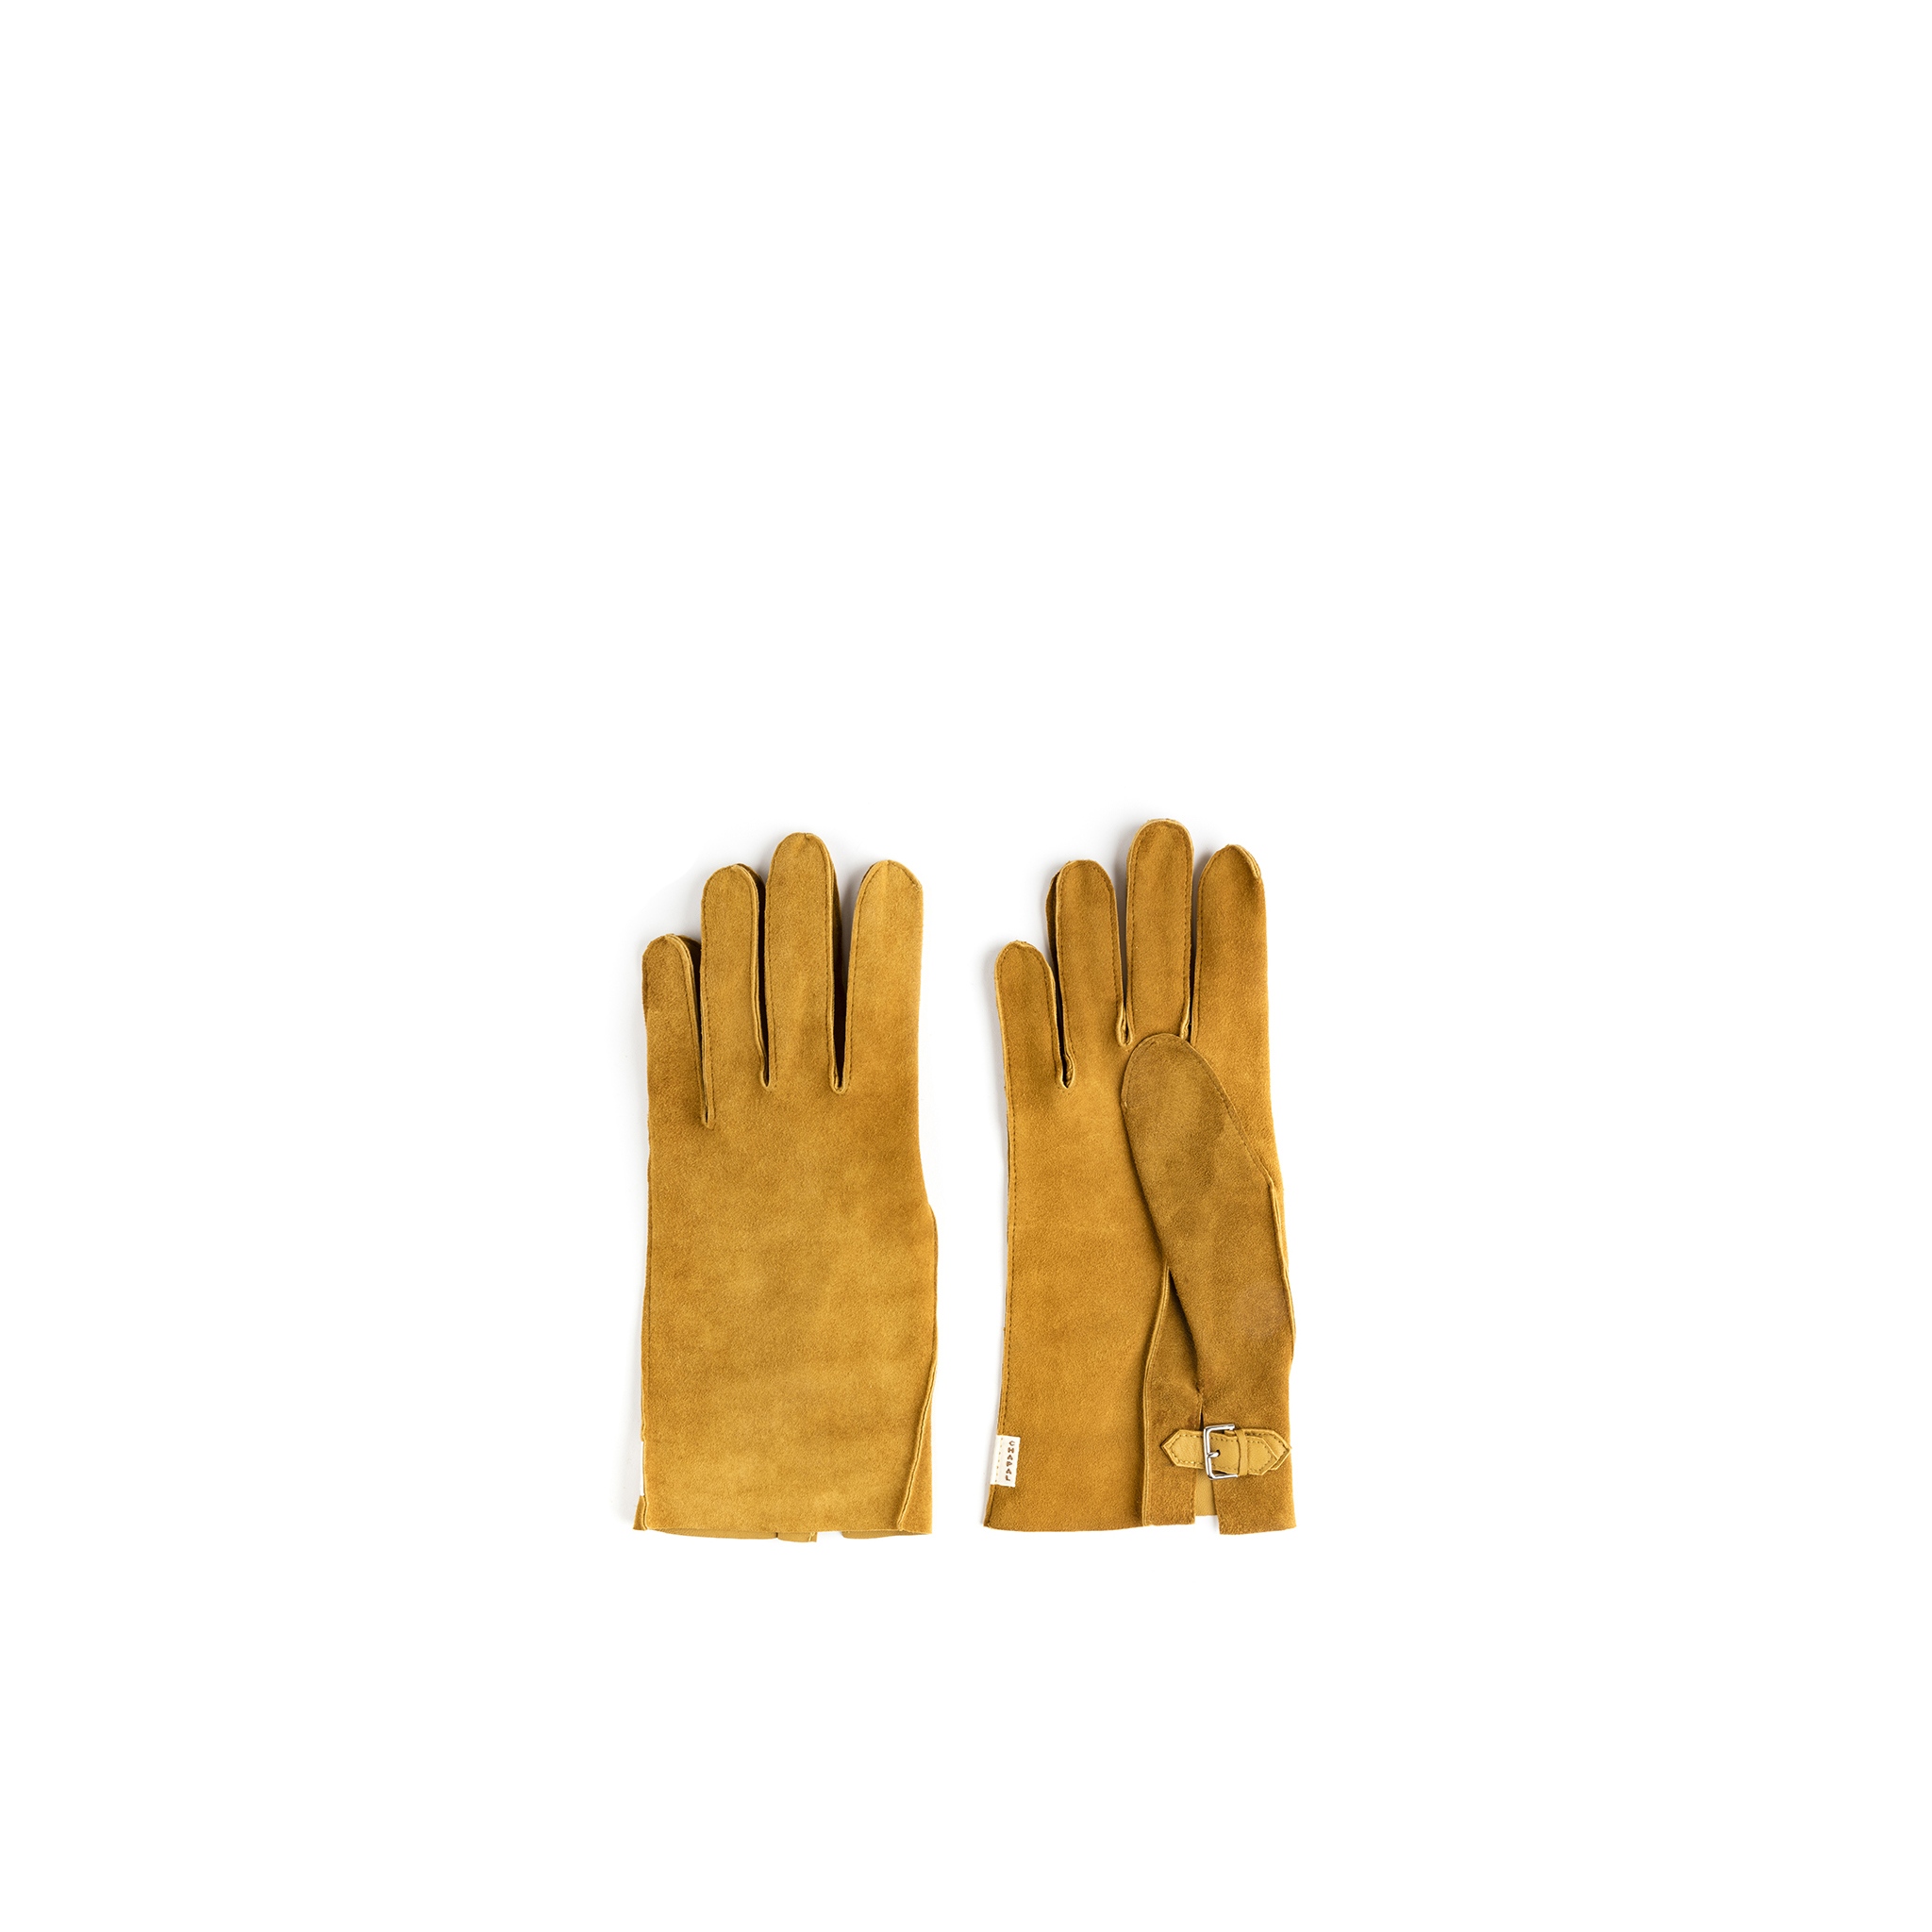 Saumur Gloves - Suede lamb leather - Tan color